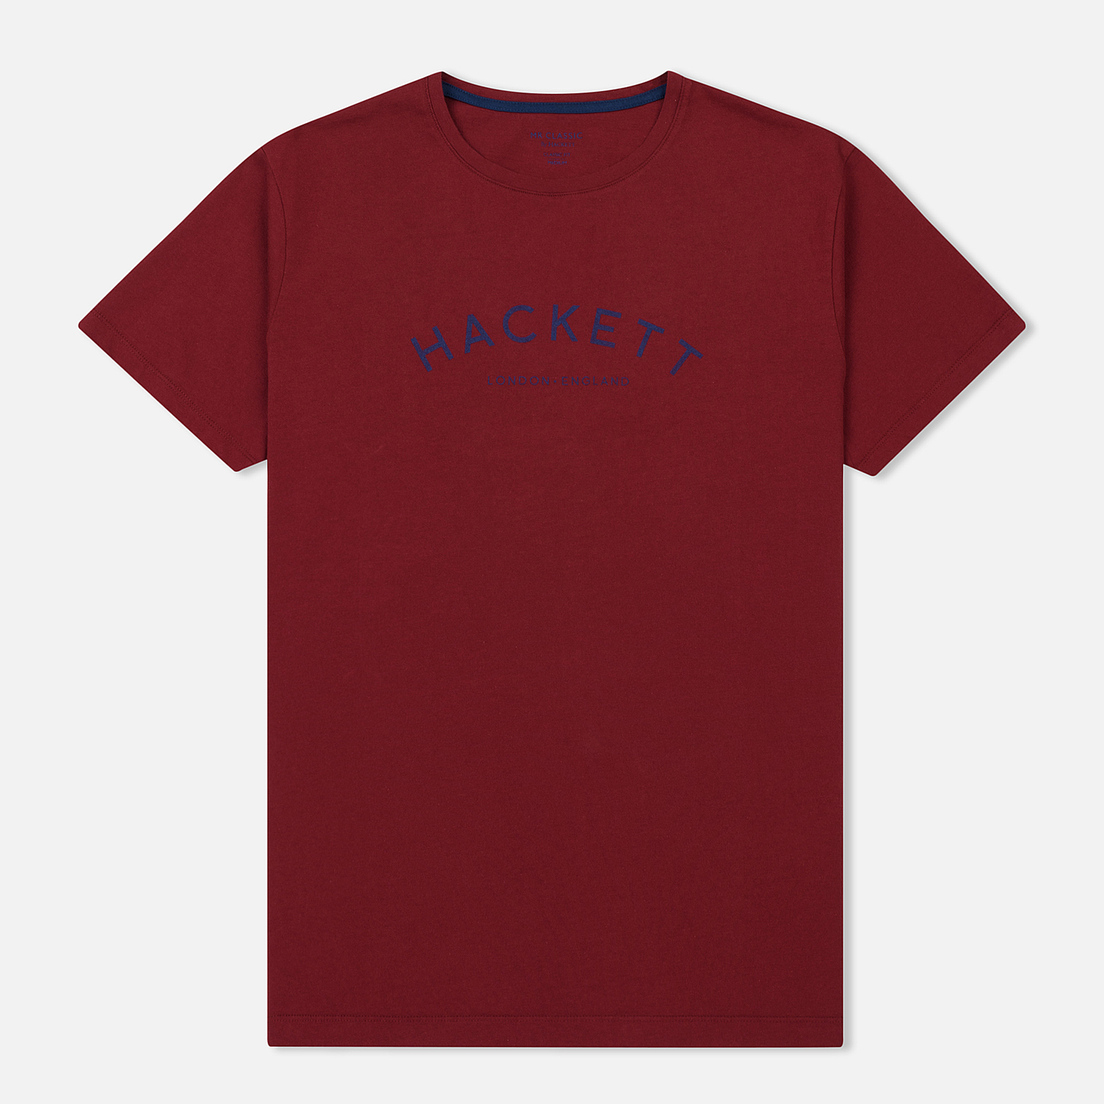 Hackett Мужская футболка Mr. Classic